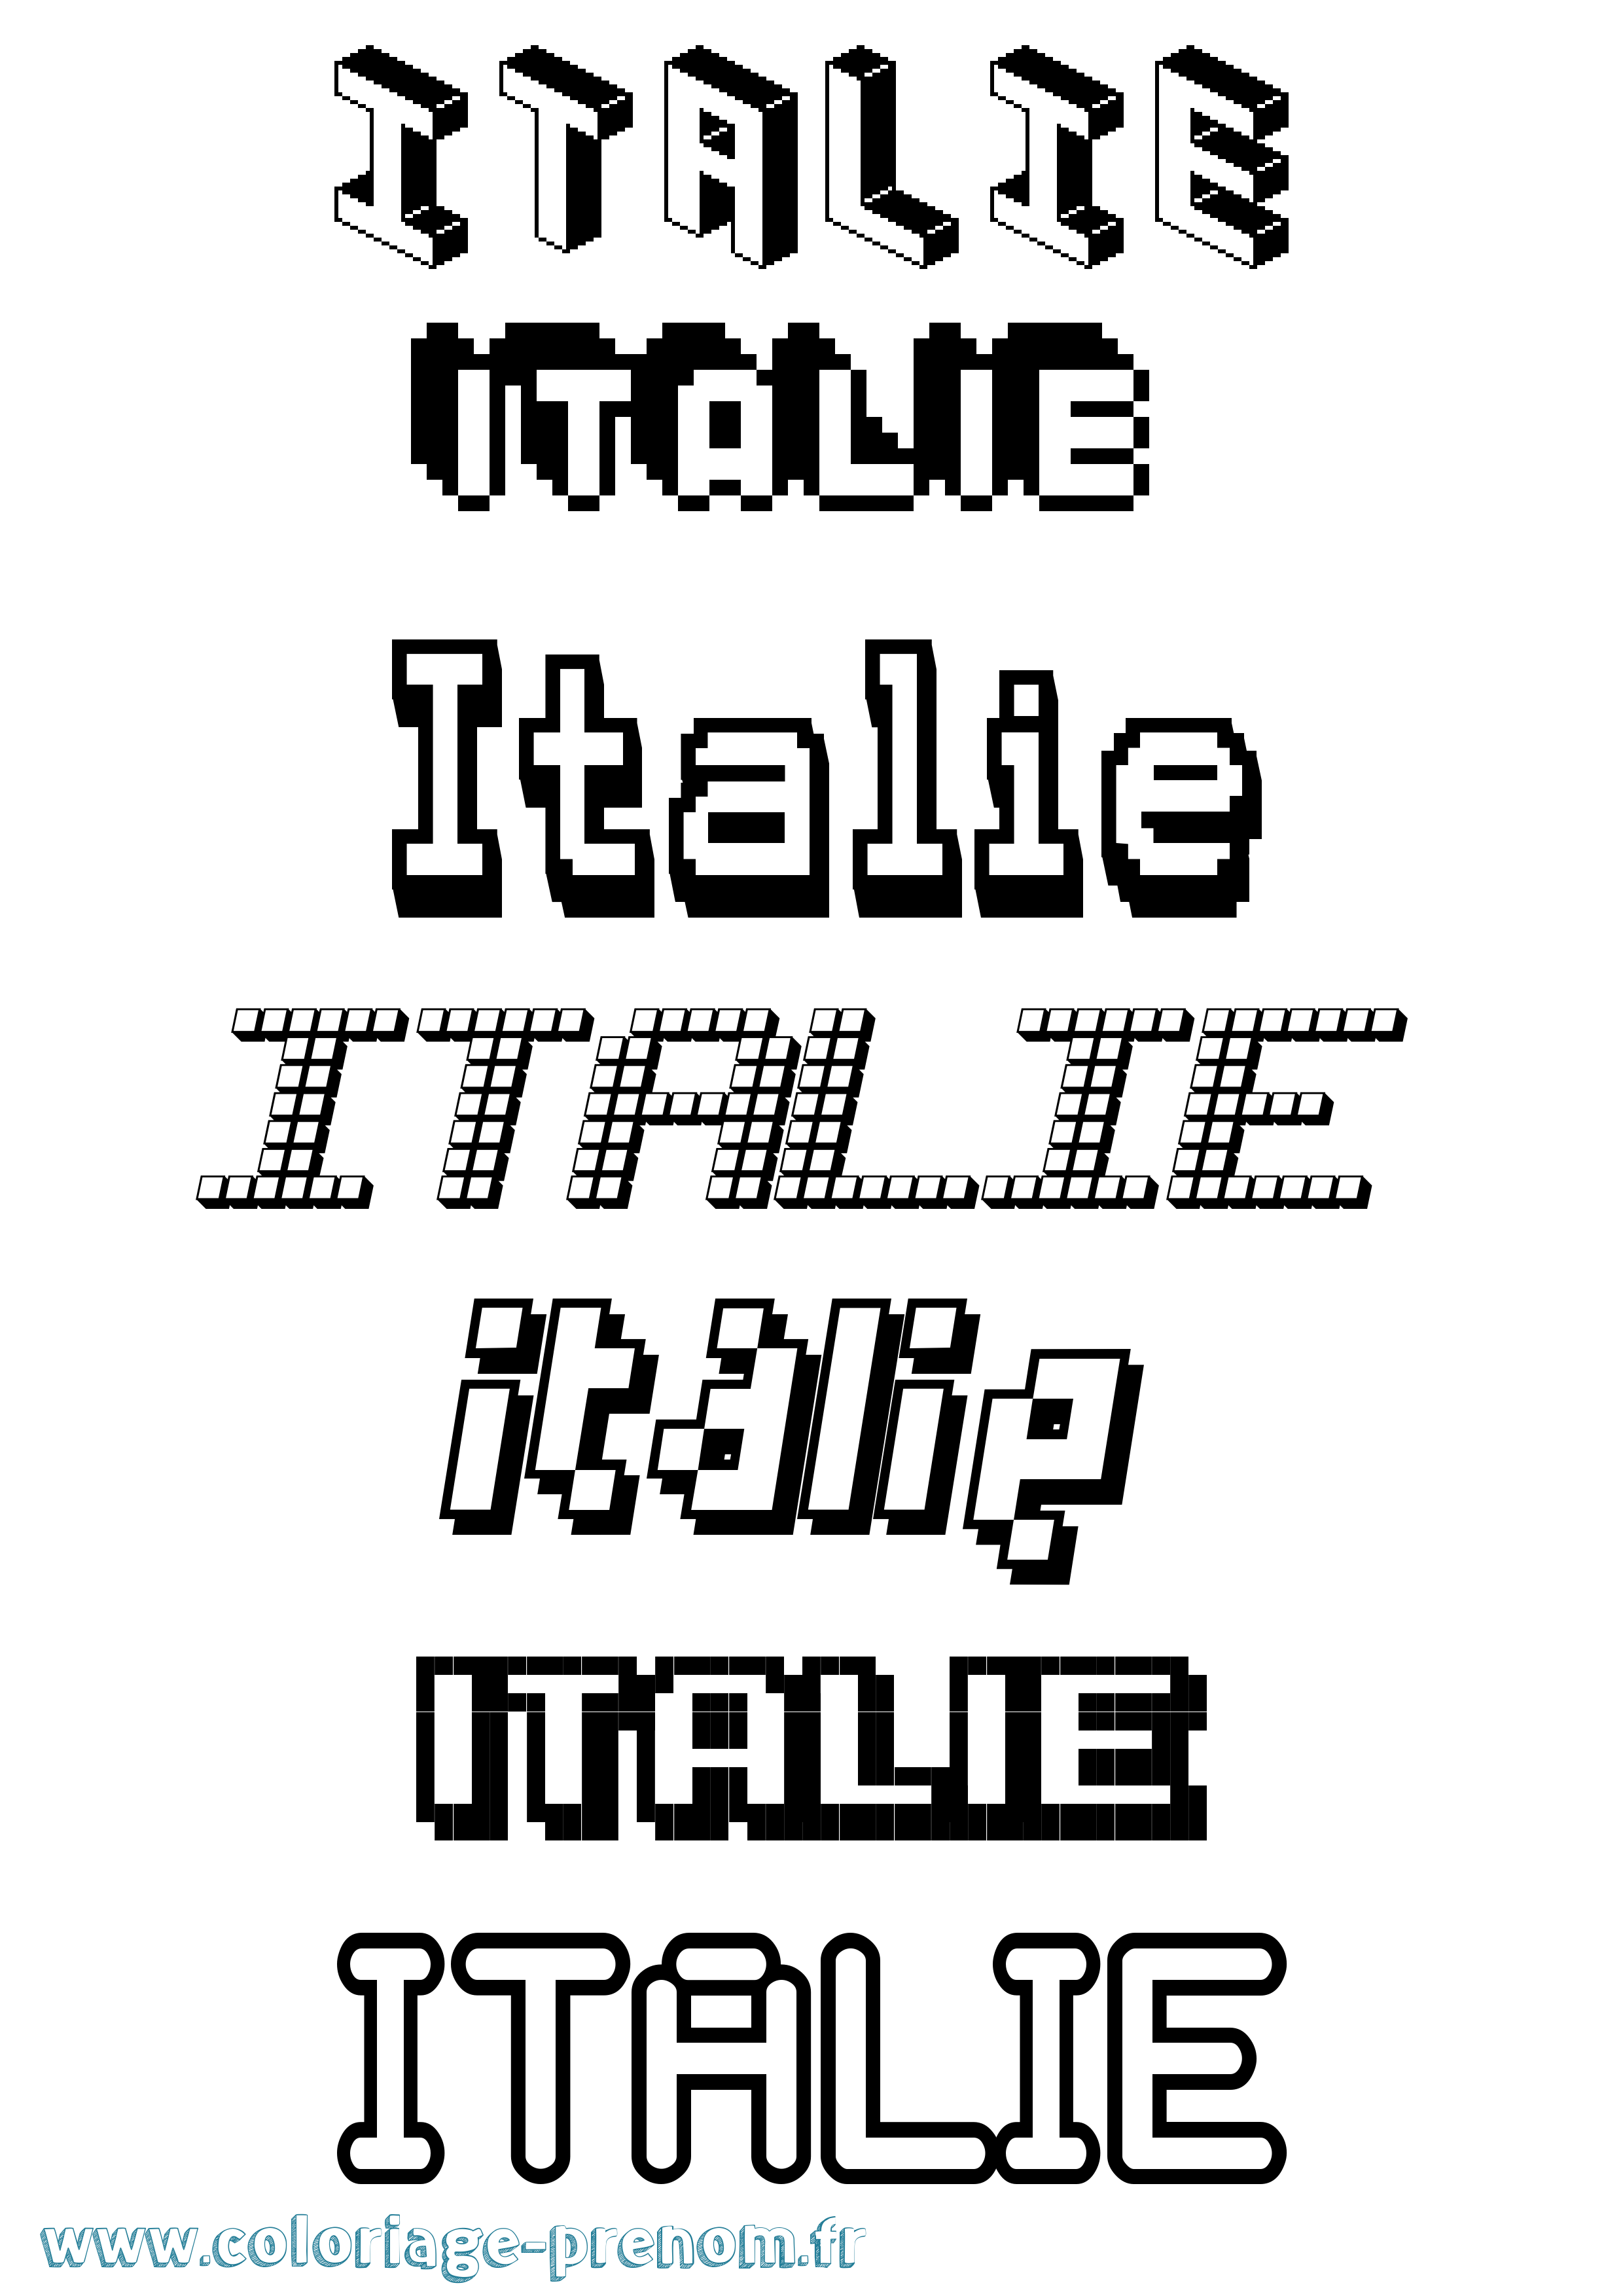 Coloriage prénom Italie Pixel